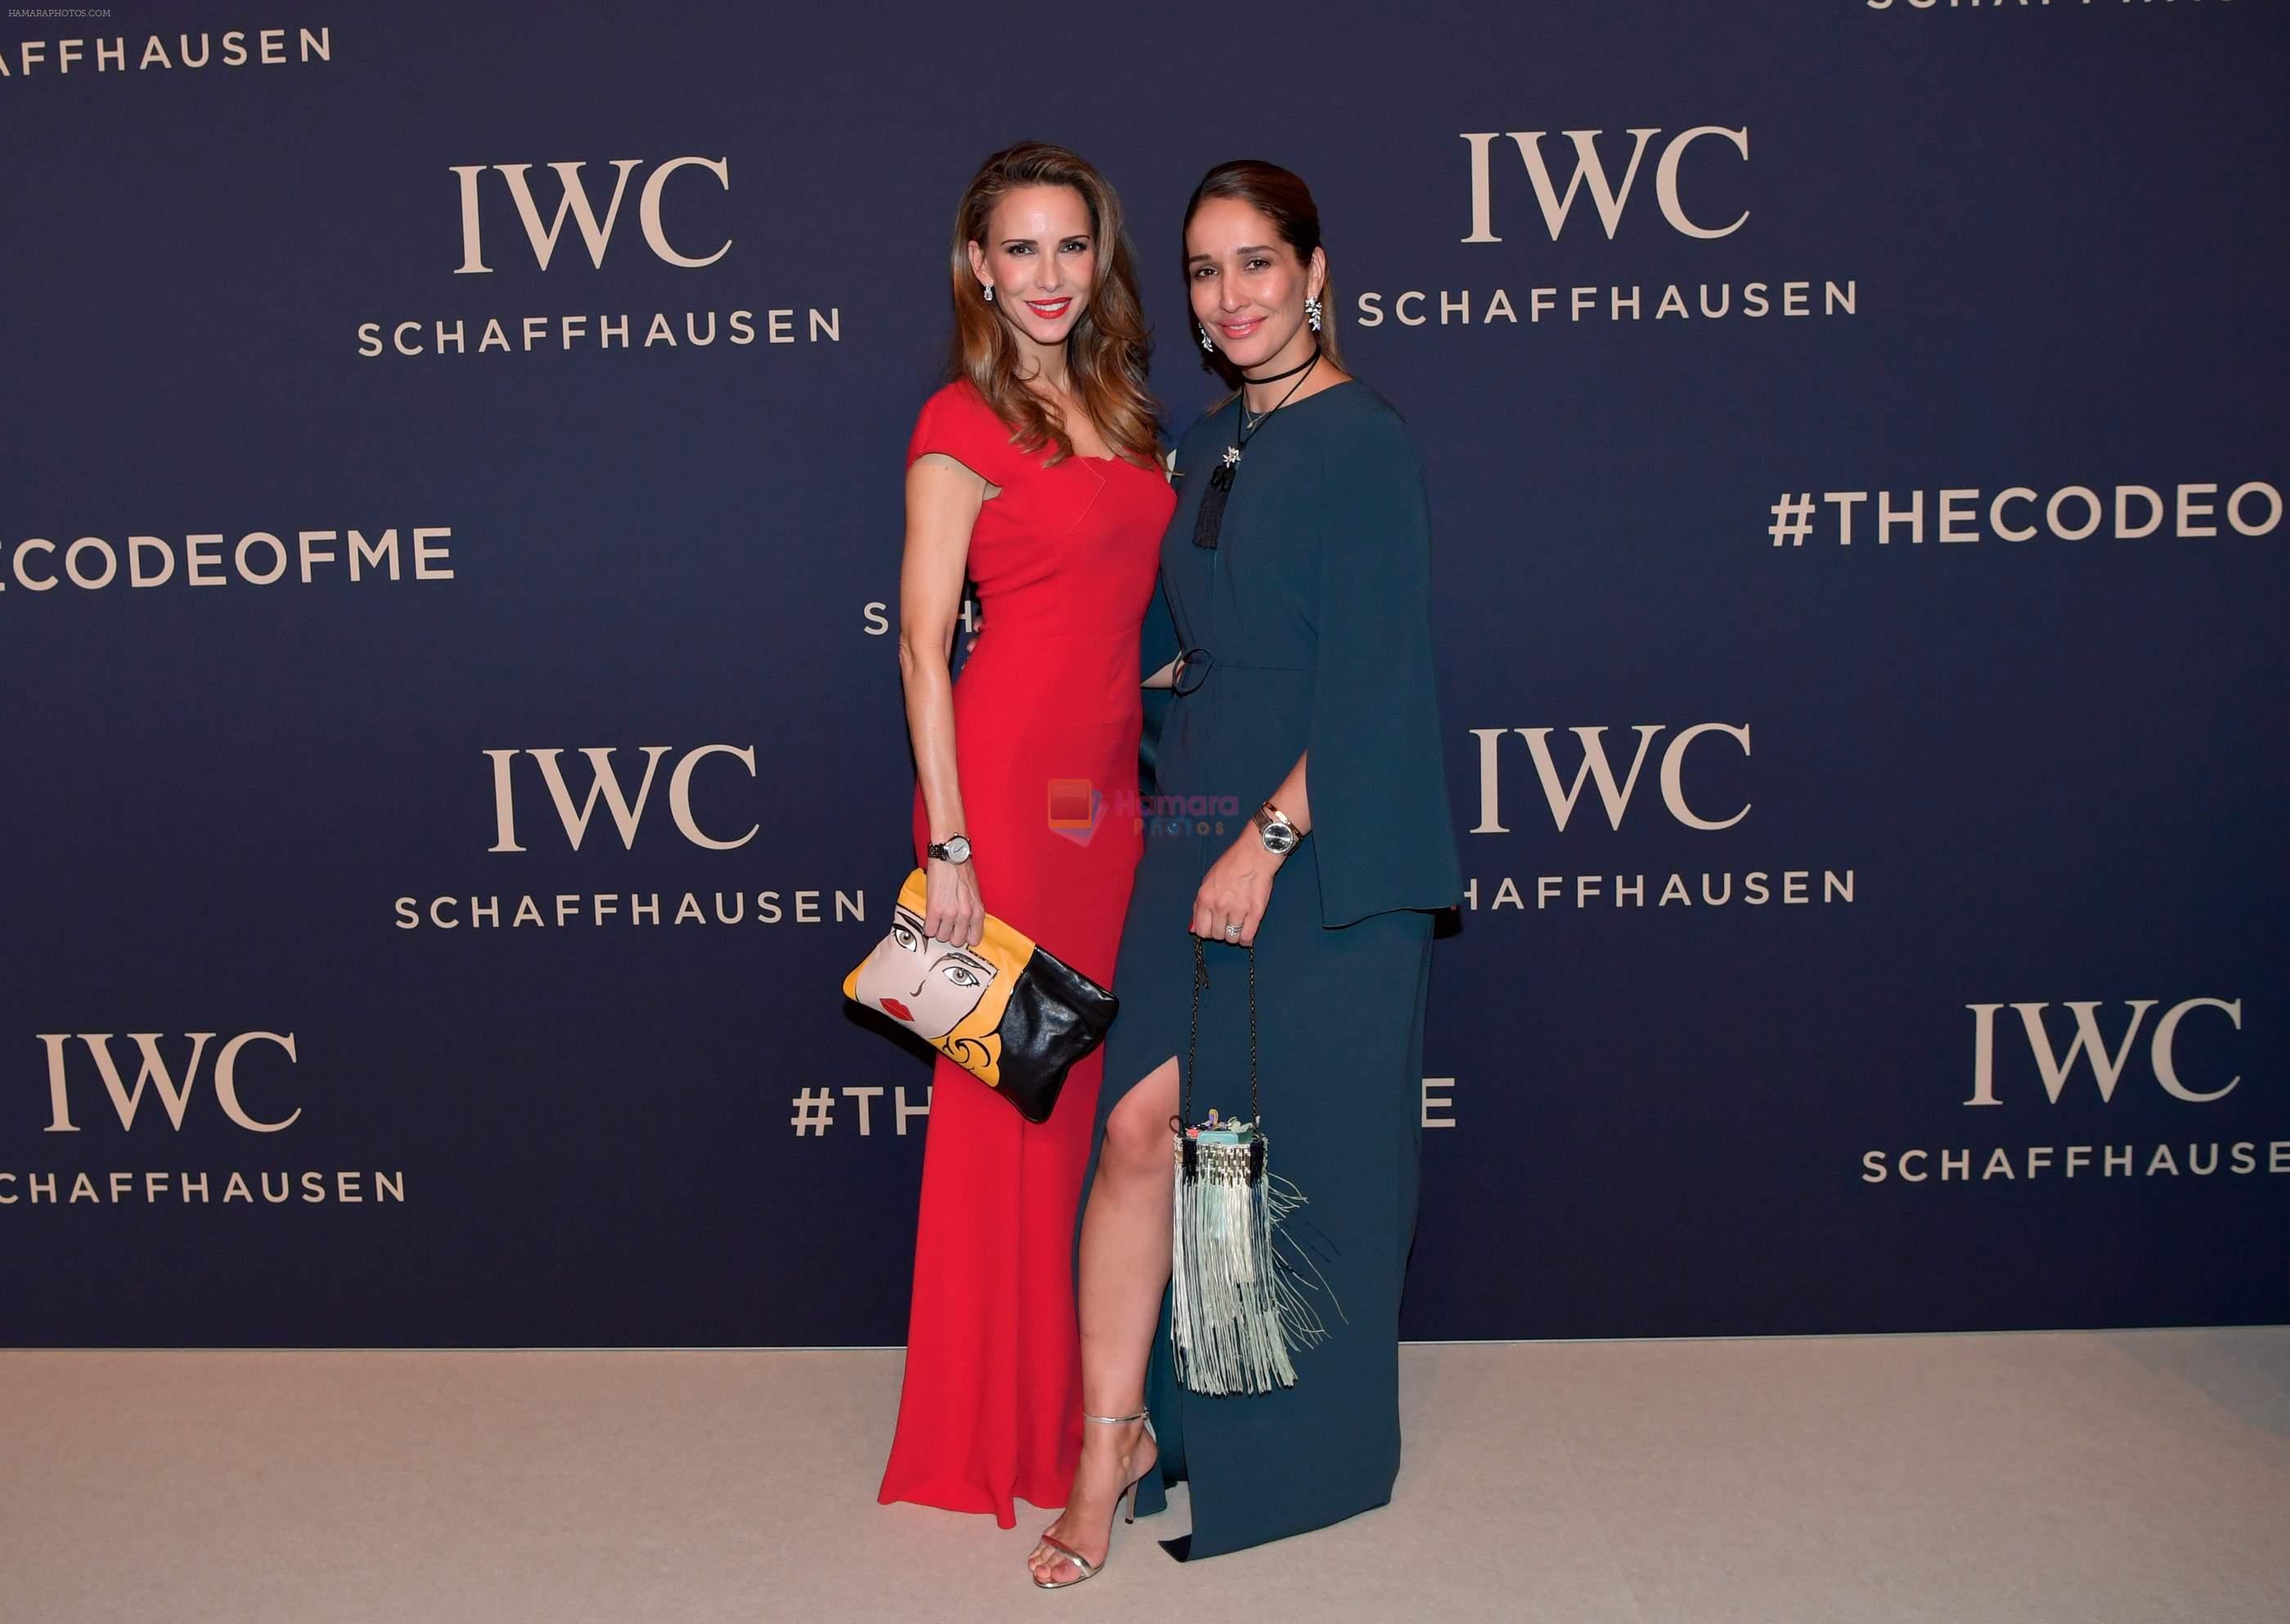 at IWC gala in Switzerland on 18th Jan 2017